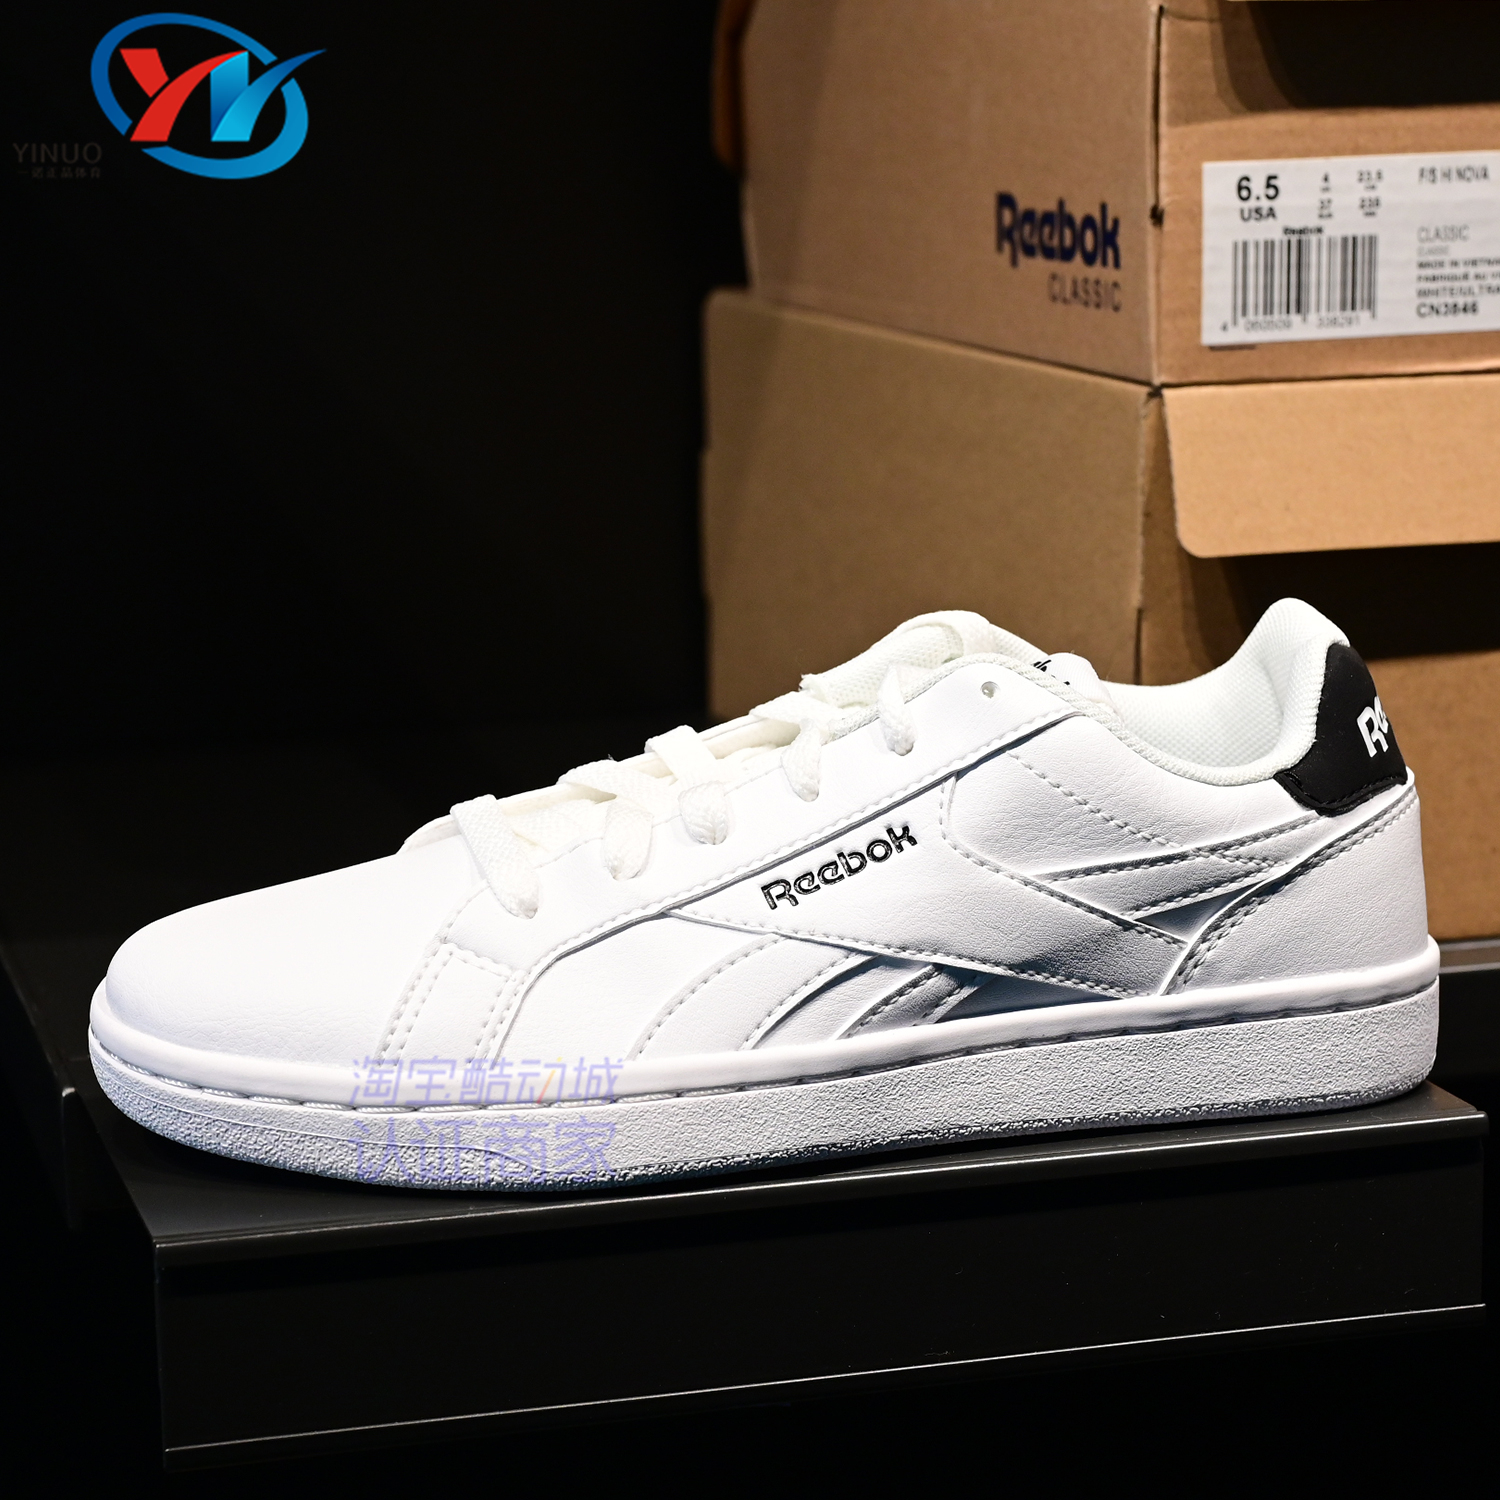 Mens Reebok Classic Leather Athletic Shoe - White / Gum | Journeys-omiya.com.vn